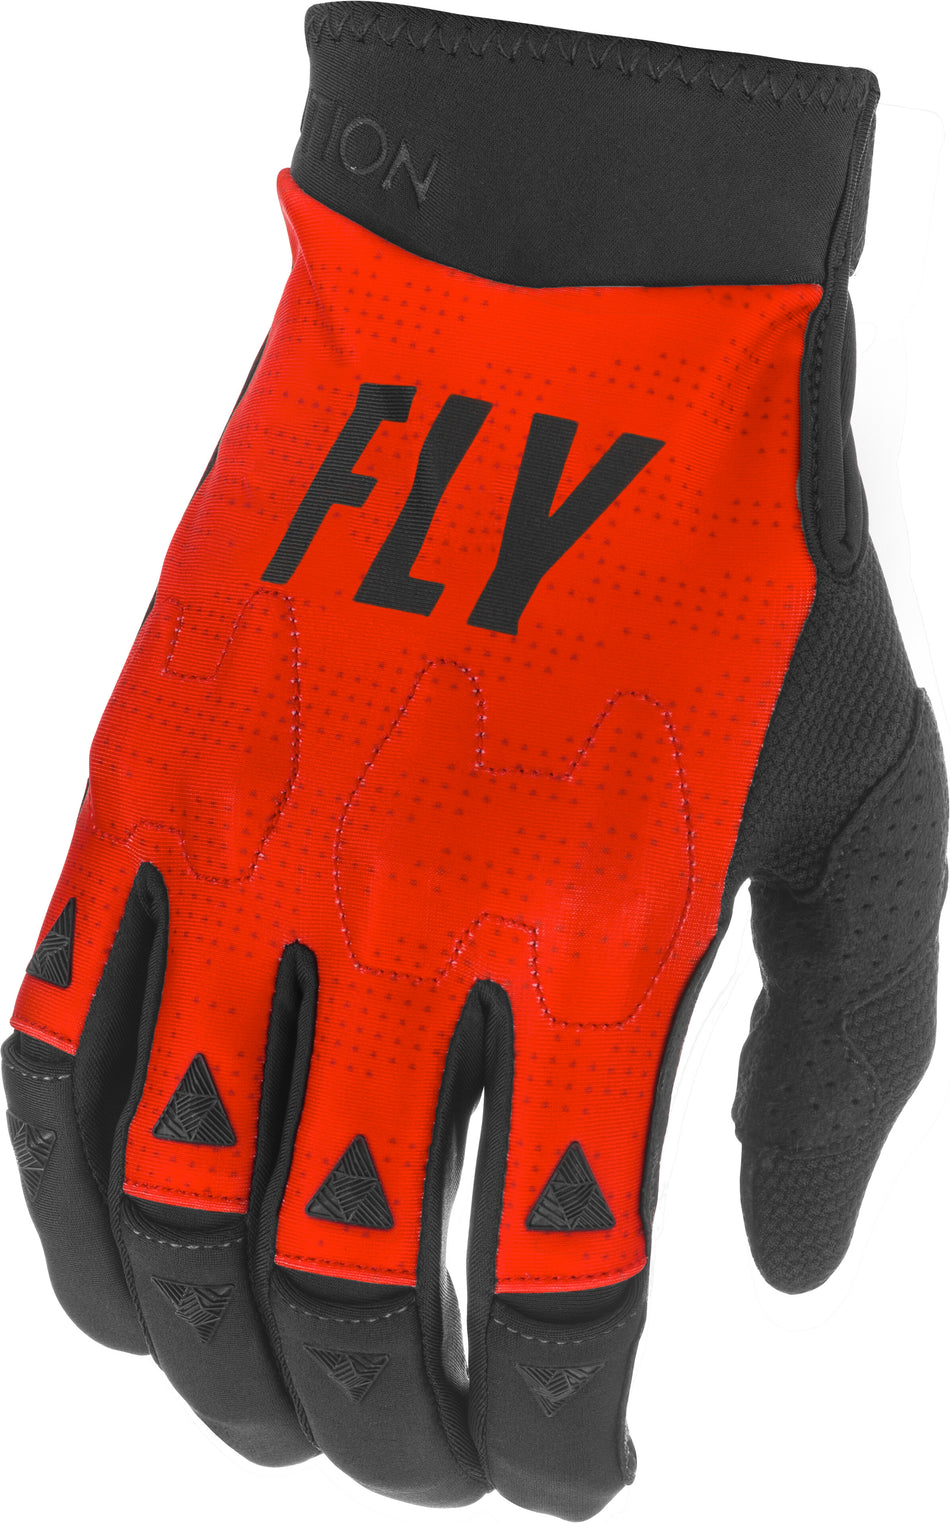 FLY RACING Evolution Dst Gloves Red/Black/White Sz 09 374-11209